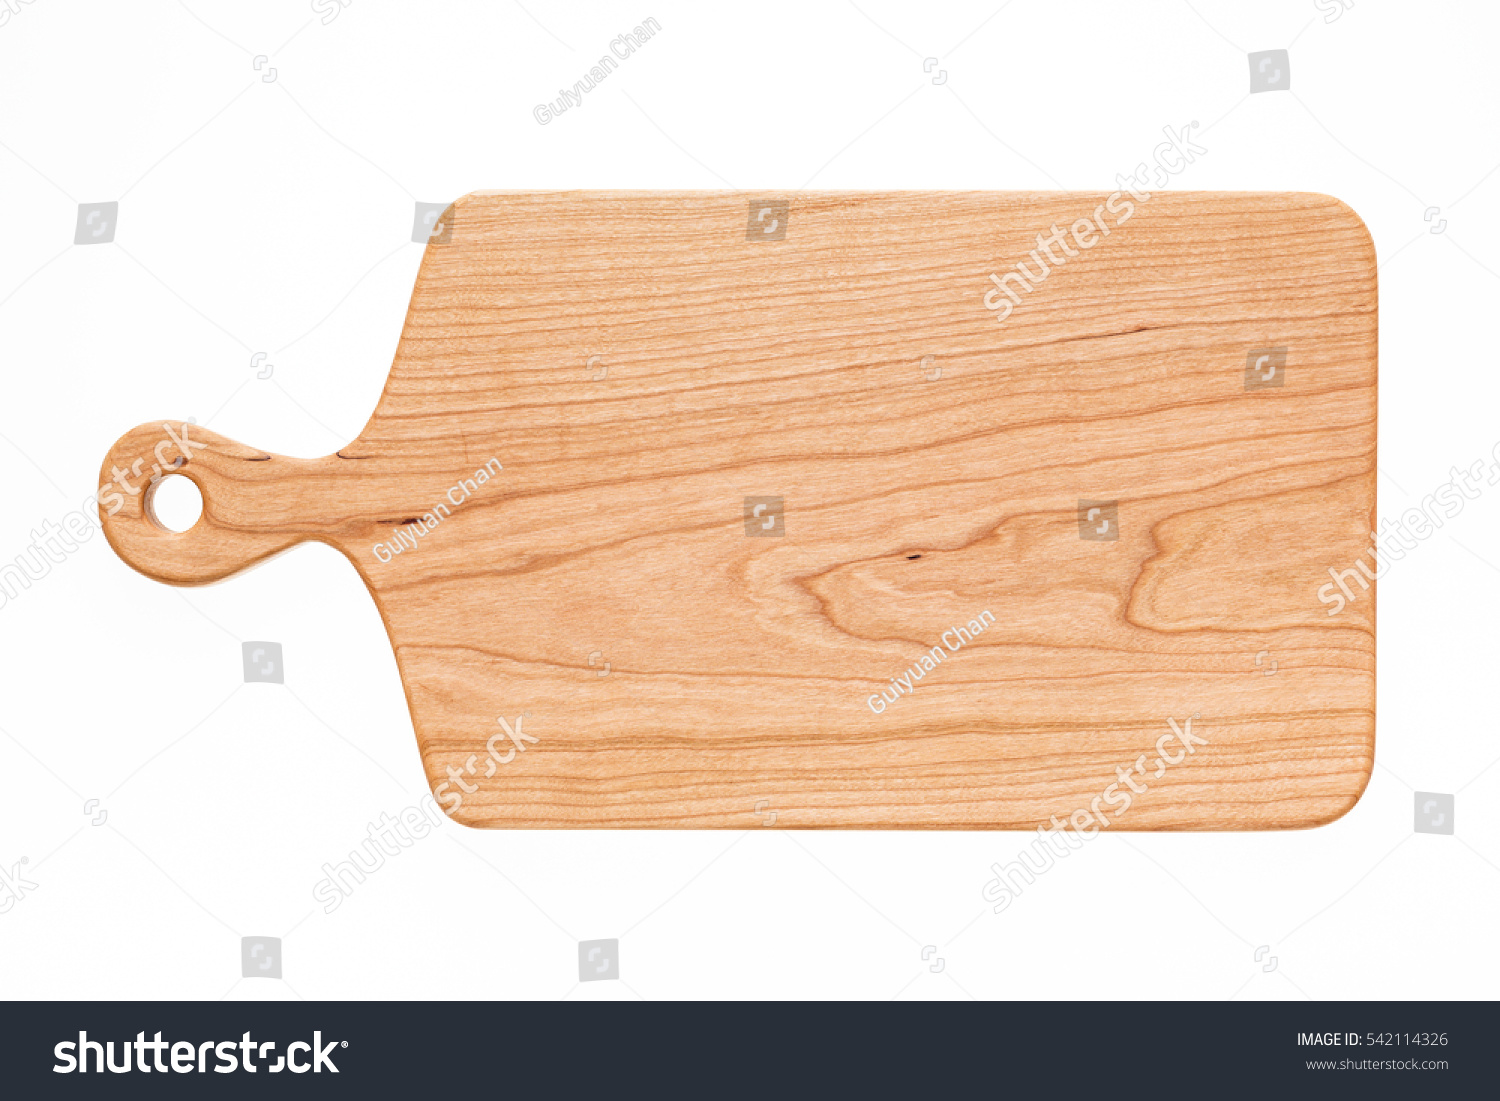 Cherry wood cutting board, handmade wood cutting board #542114326